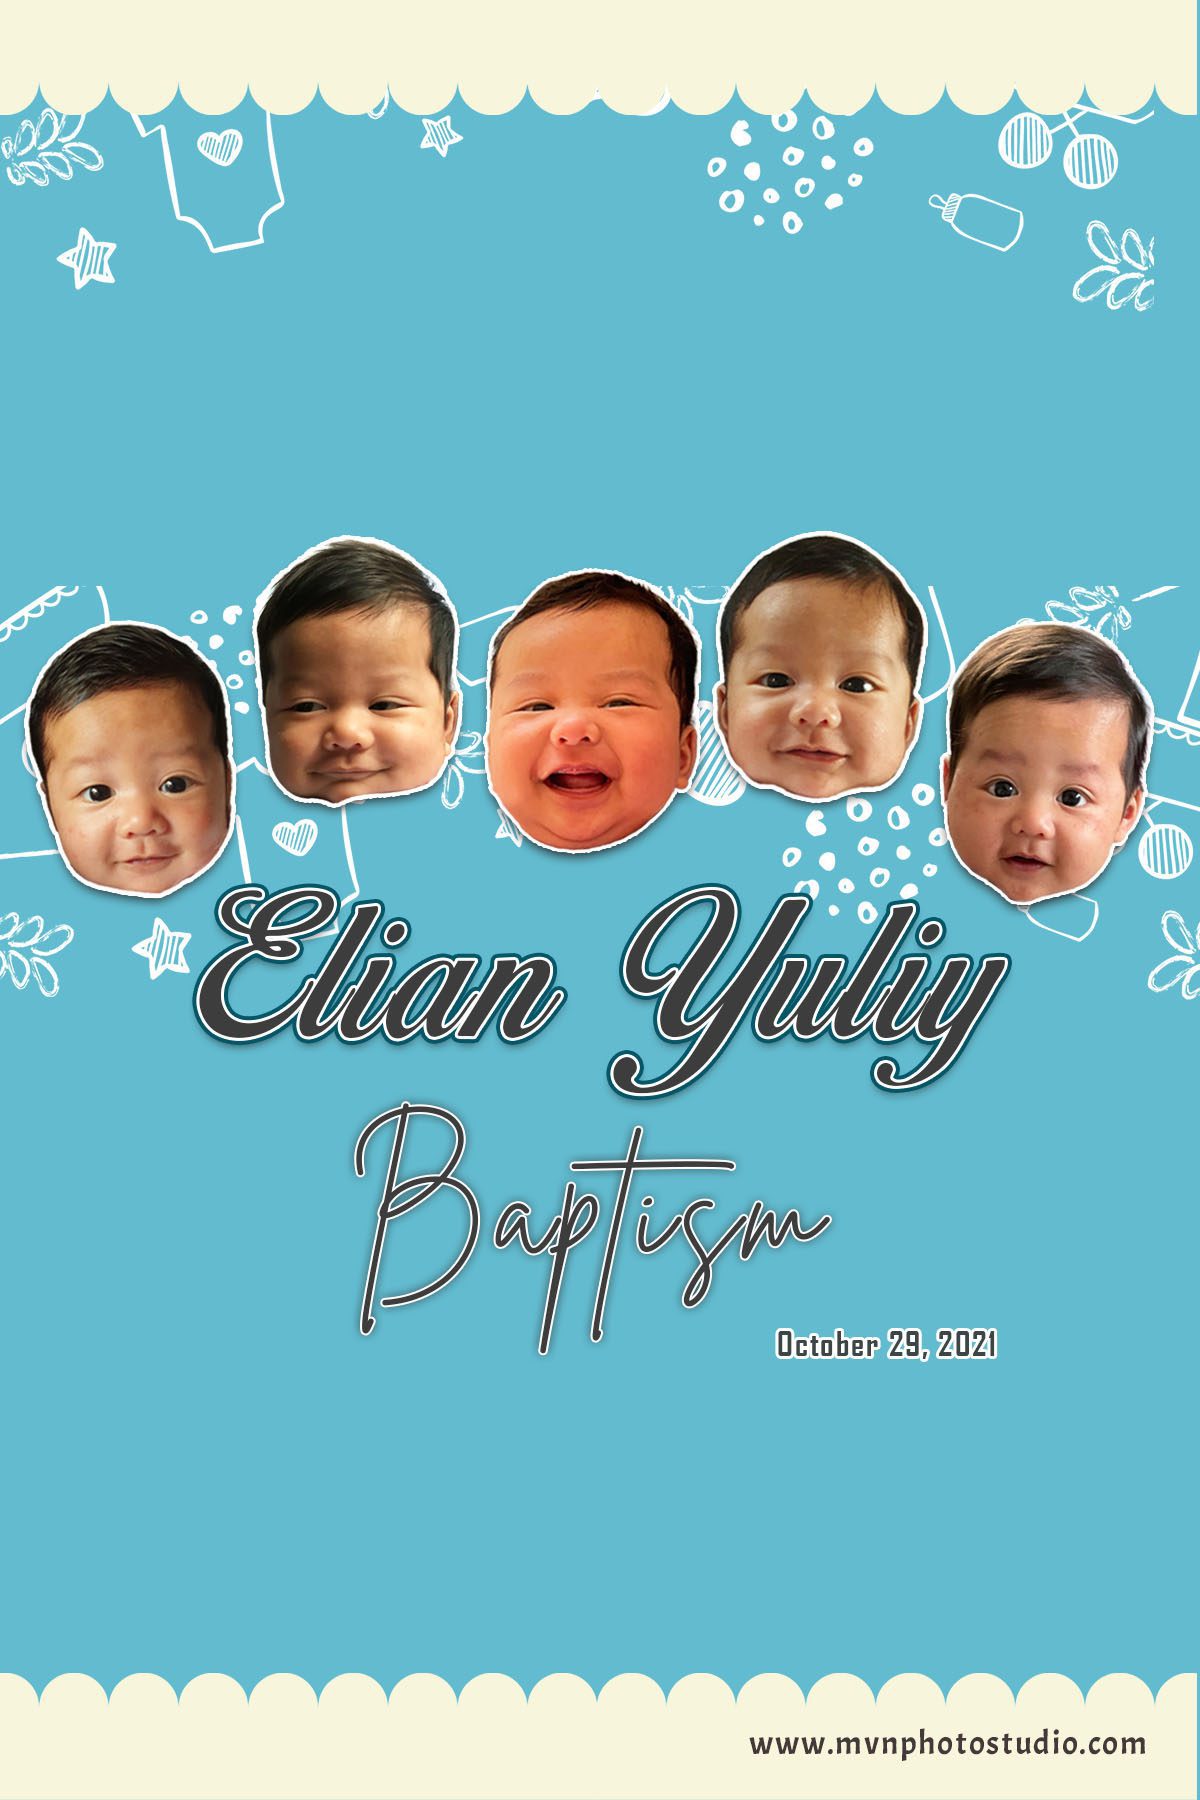 Elian Yuliy Baptism